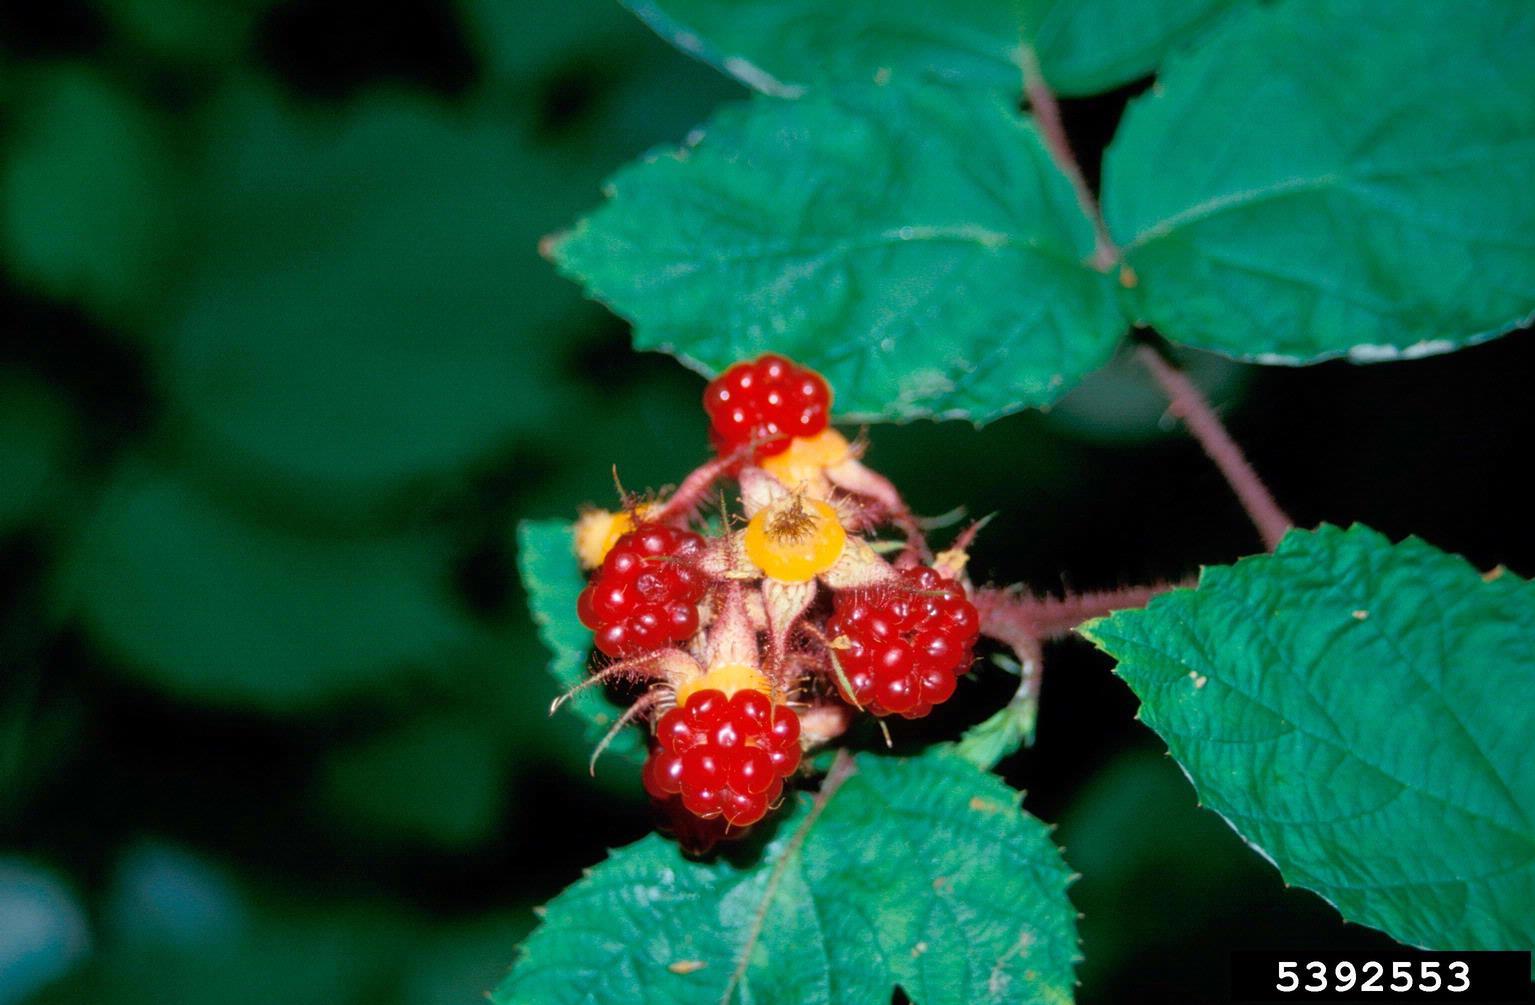 Wineberry fruit. Photo by John M. Randall, The Nature Conservancy, Bugwood.jpg